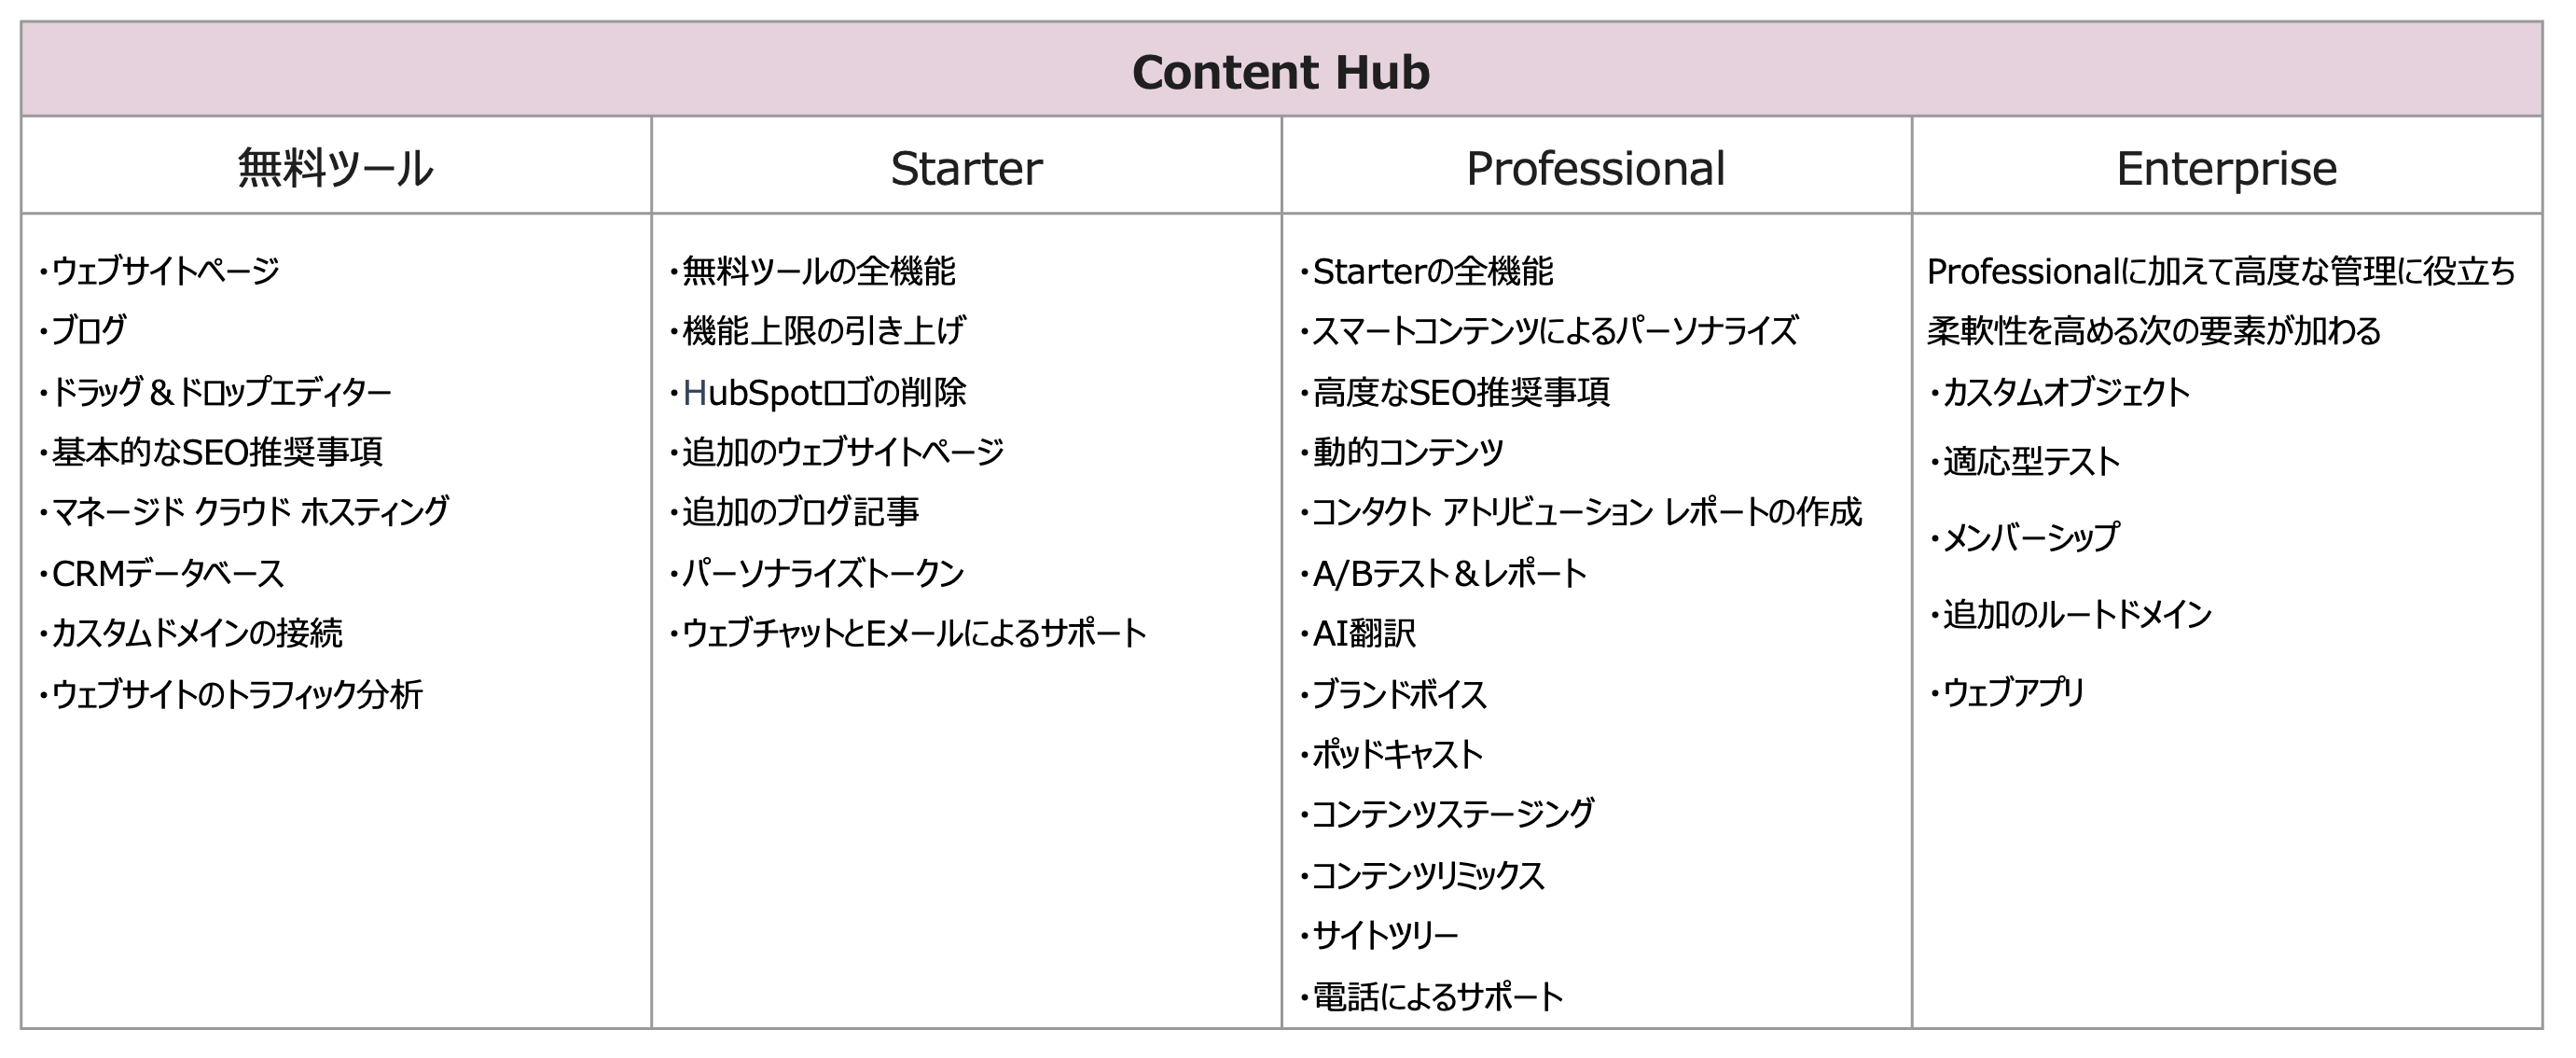 HubSpot Content Hub 有料版と無料版の違い